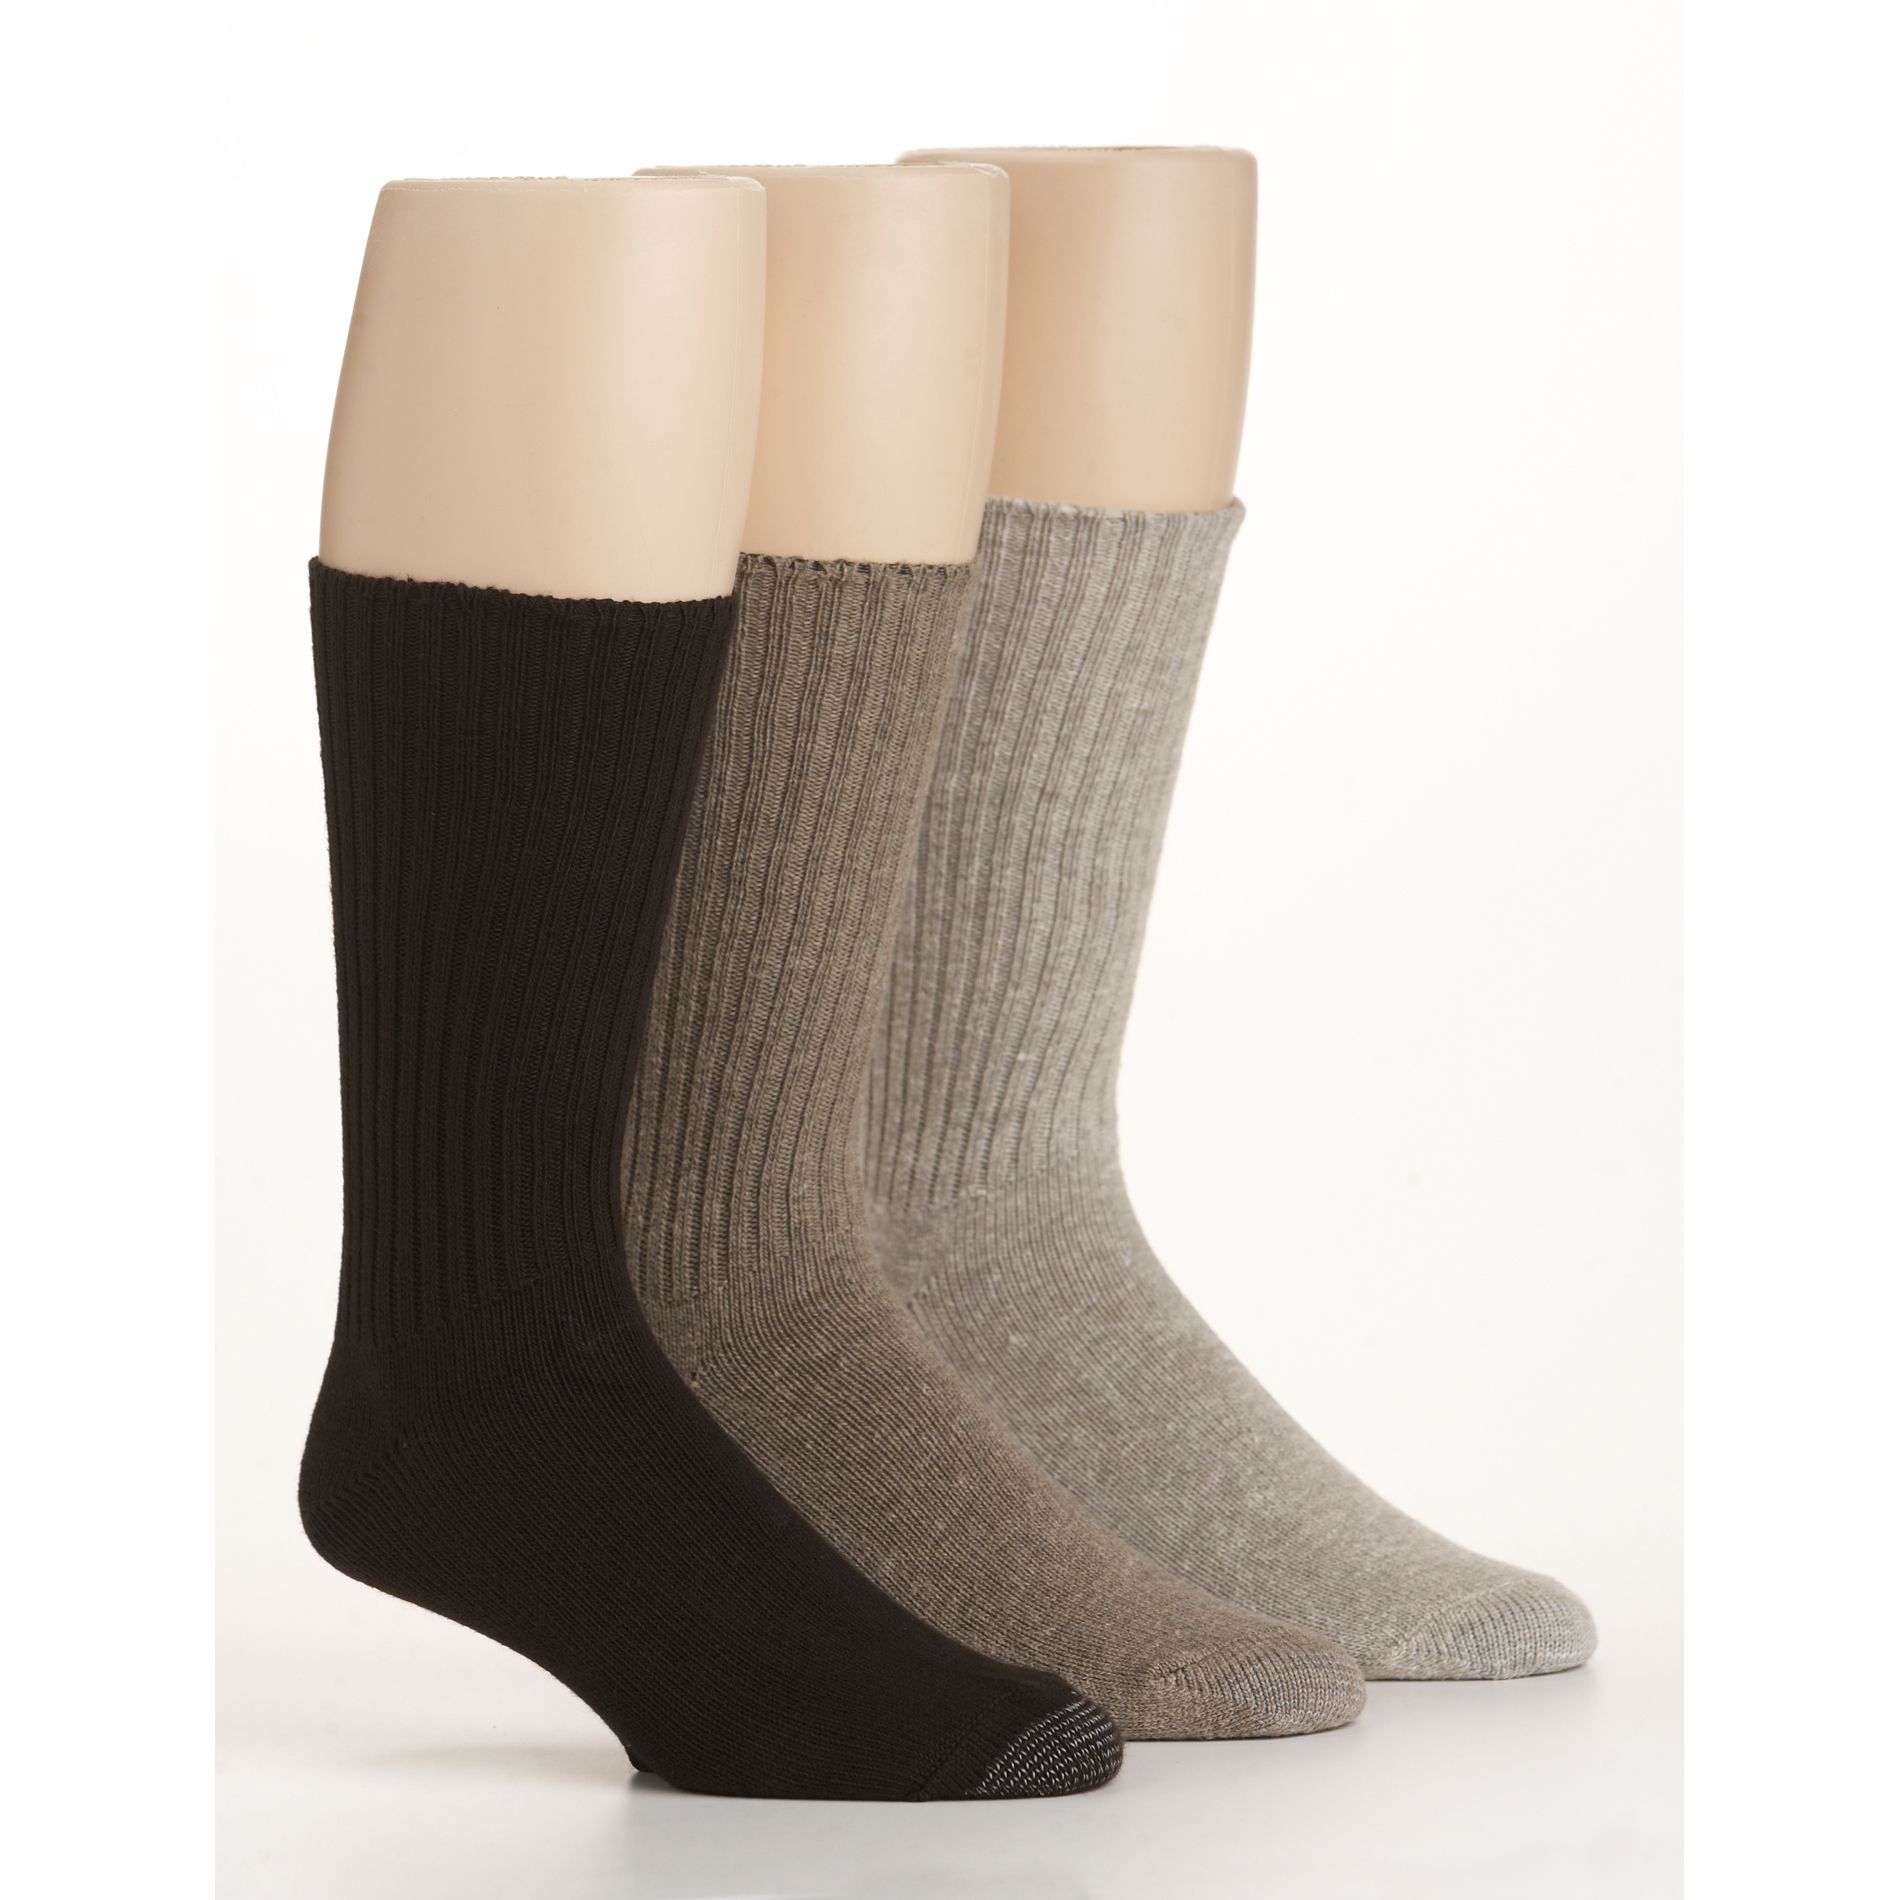 Silvertoe Men's 3-Pairs Cotton Crew Socks